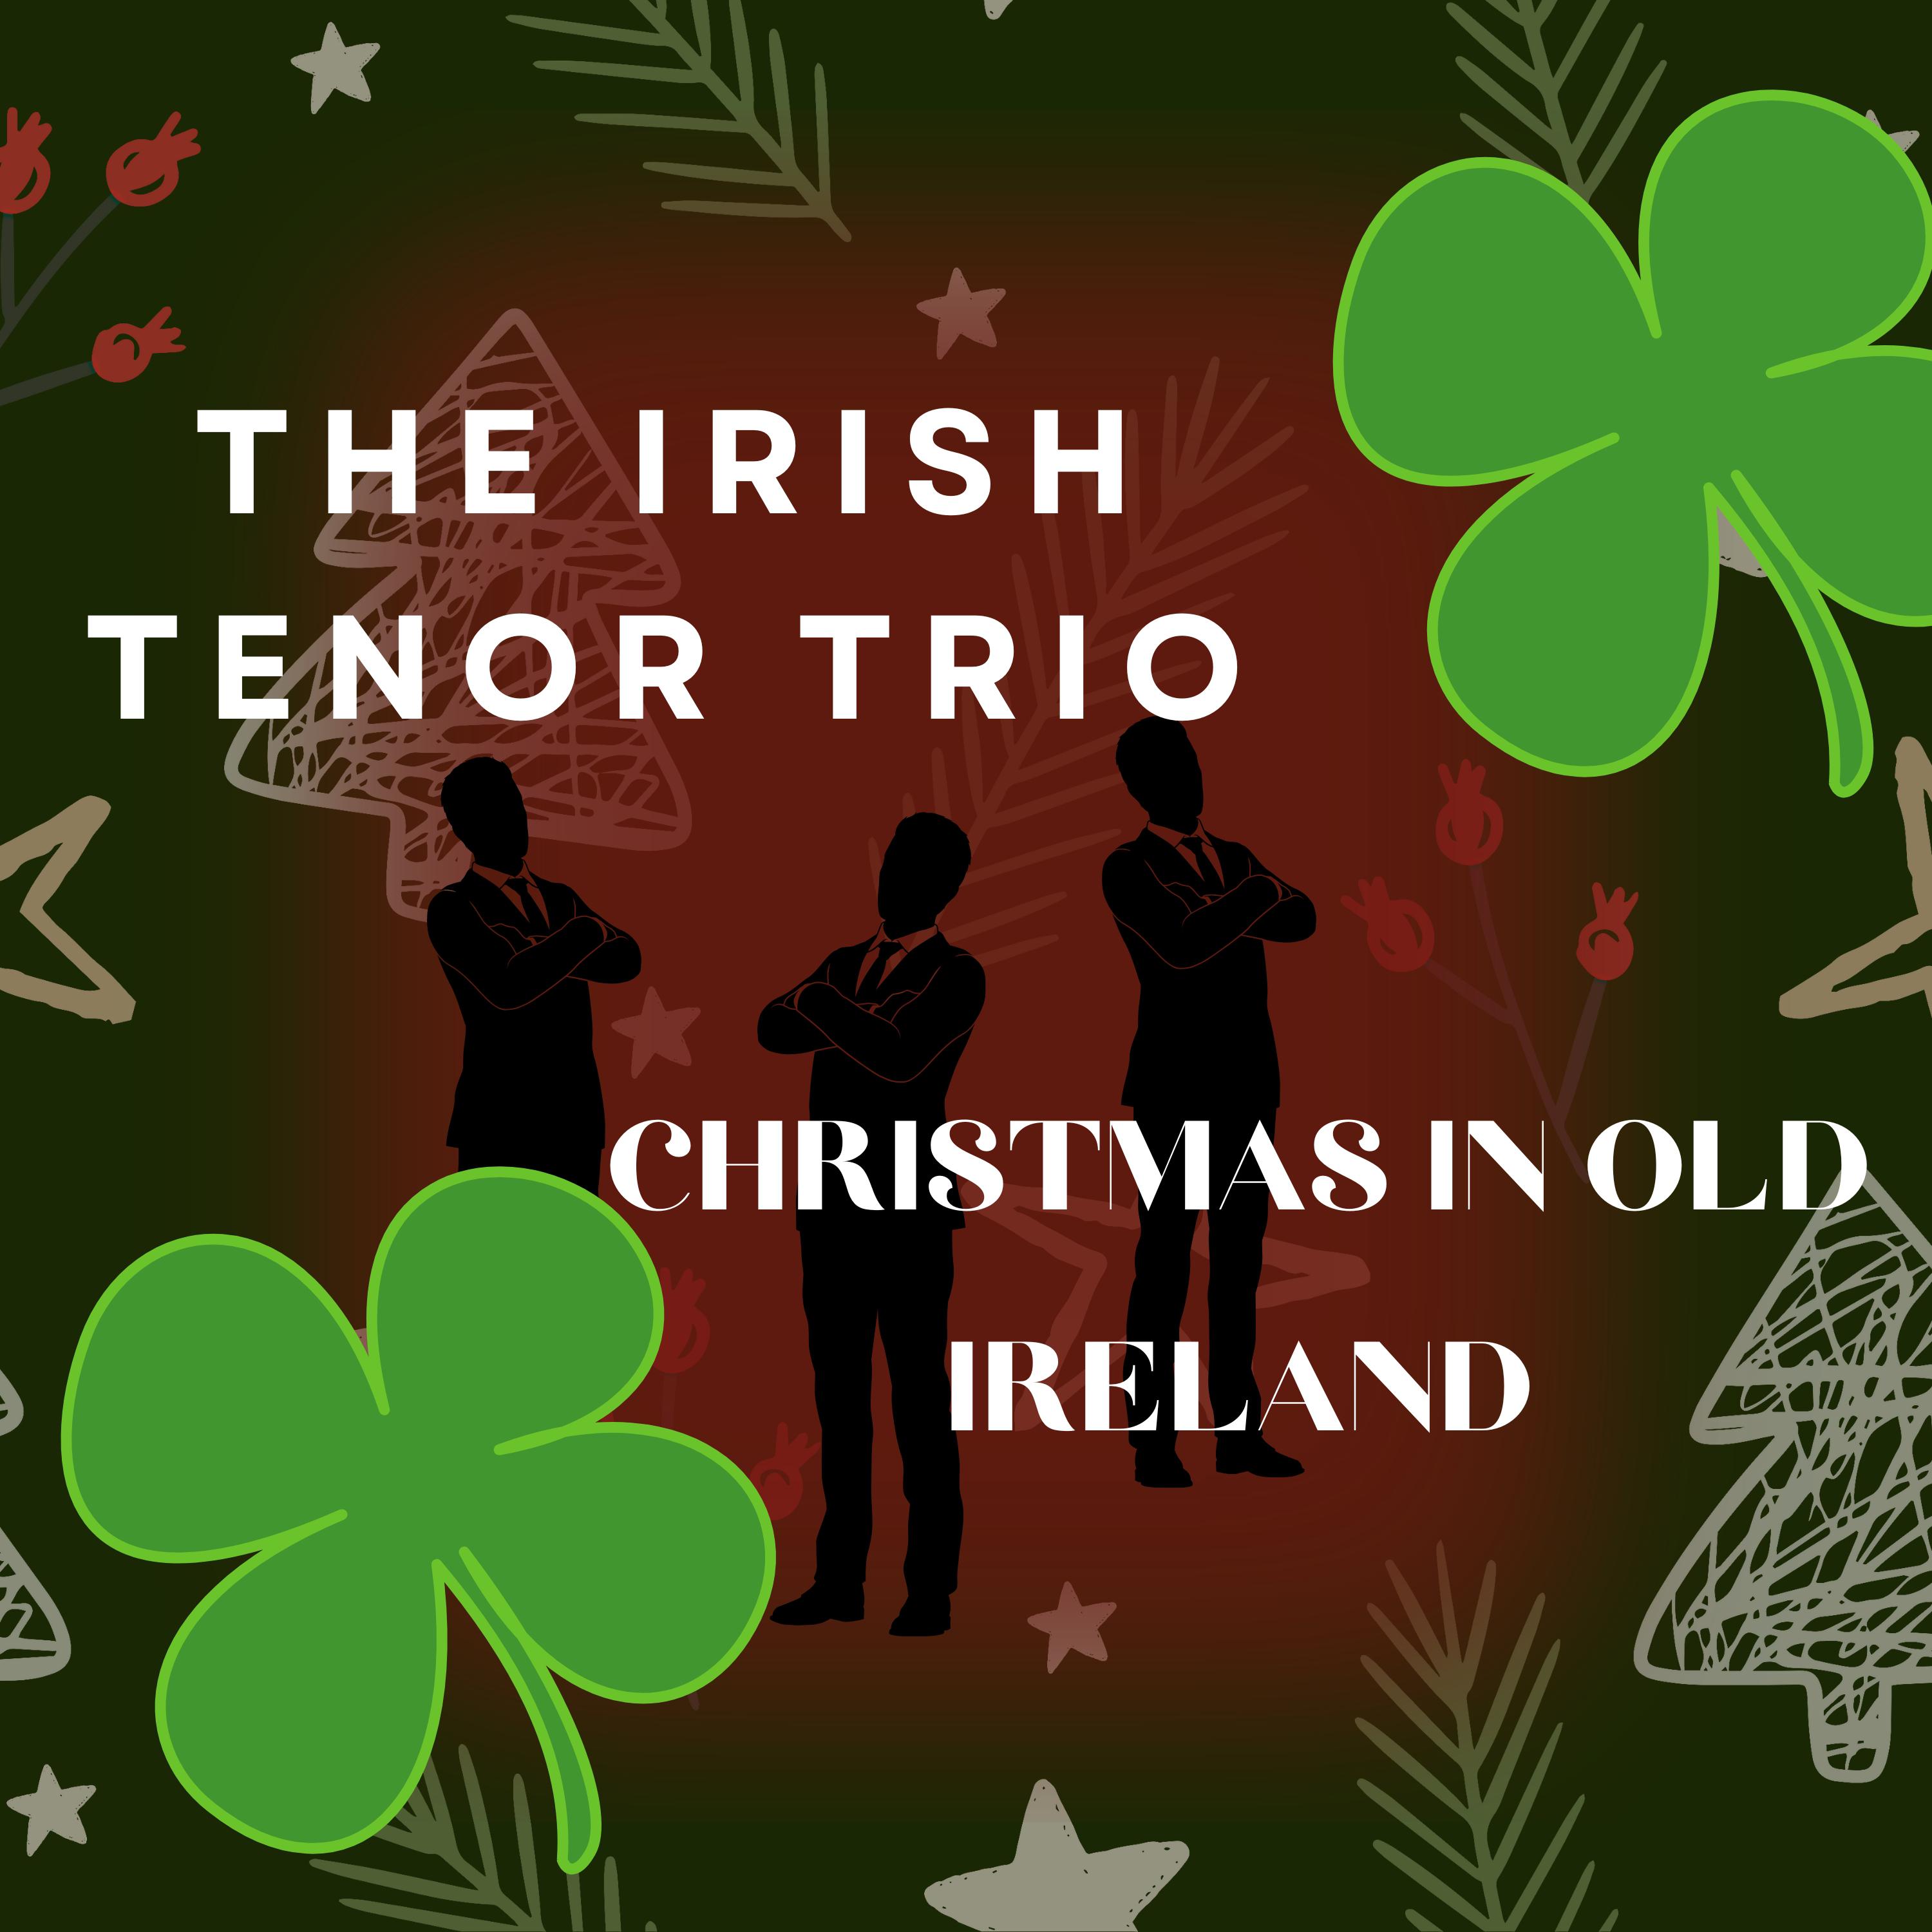 The Irish Tenor Trio - The First Noel